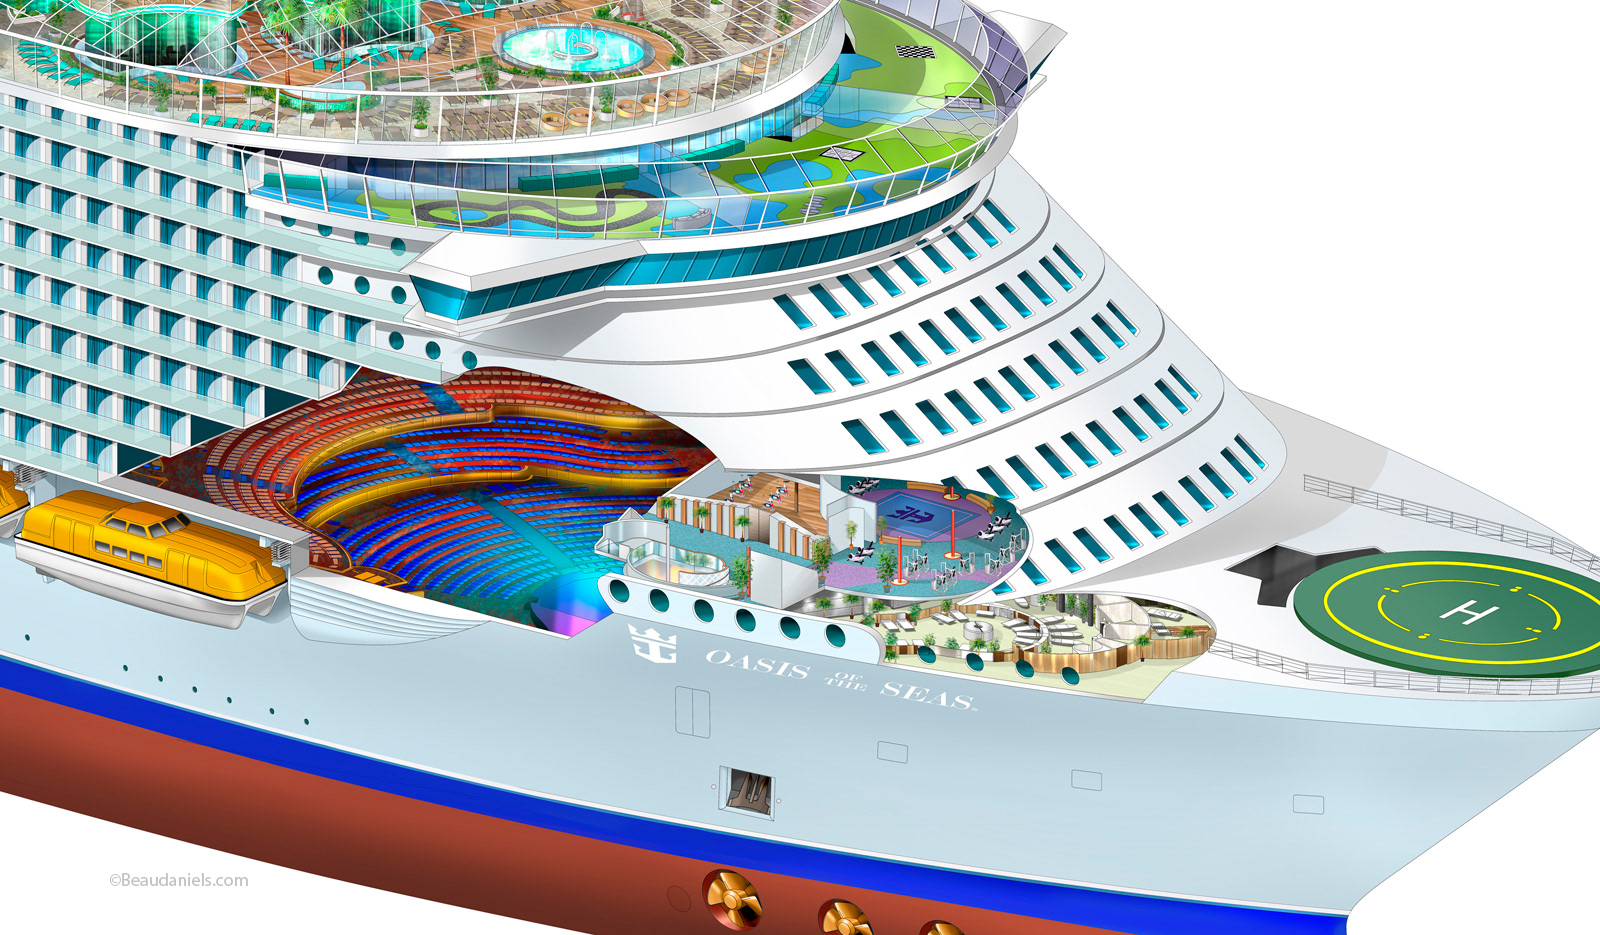 Technical illustration, Beau and Alan Daniels. - Royal Caribbean Cruise